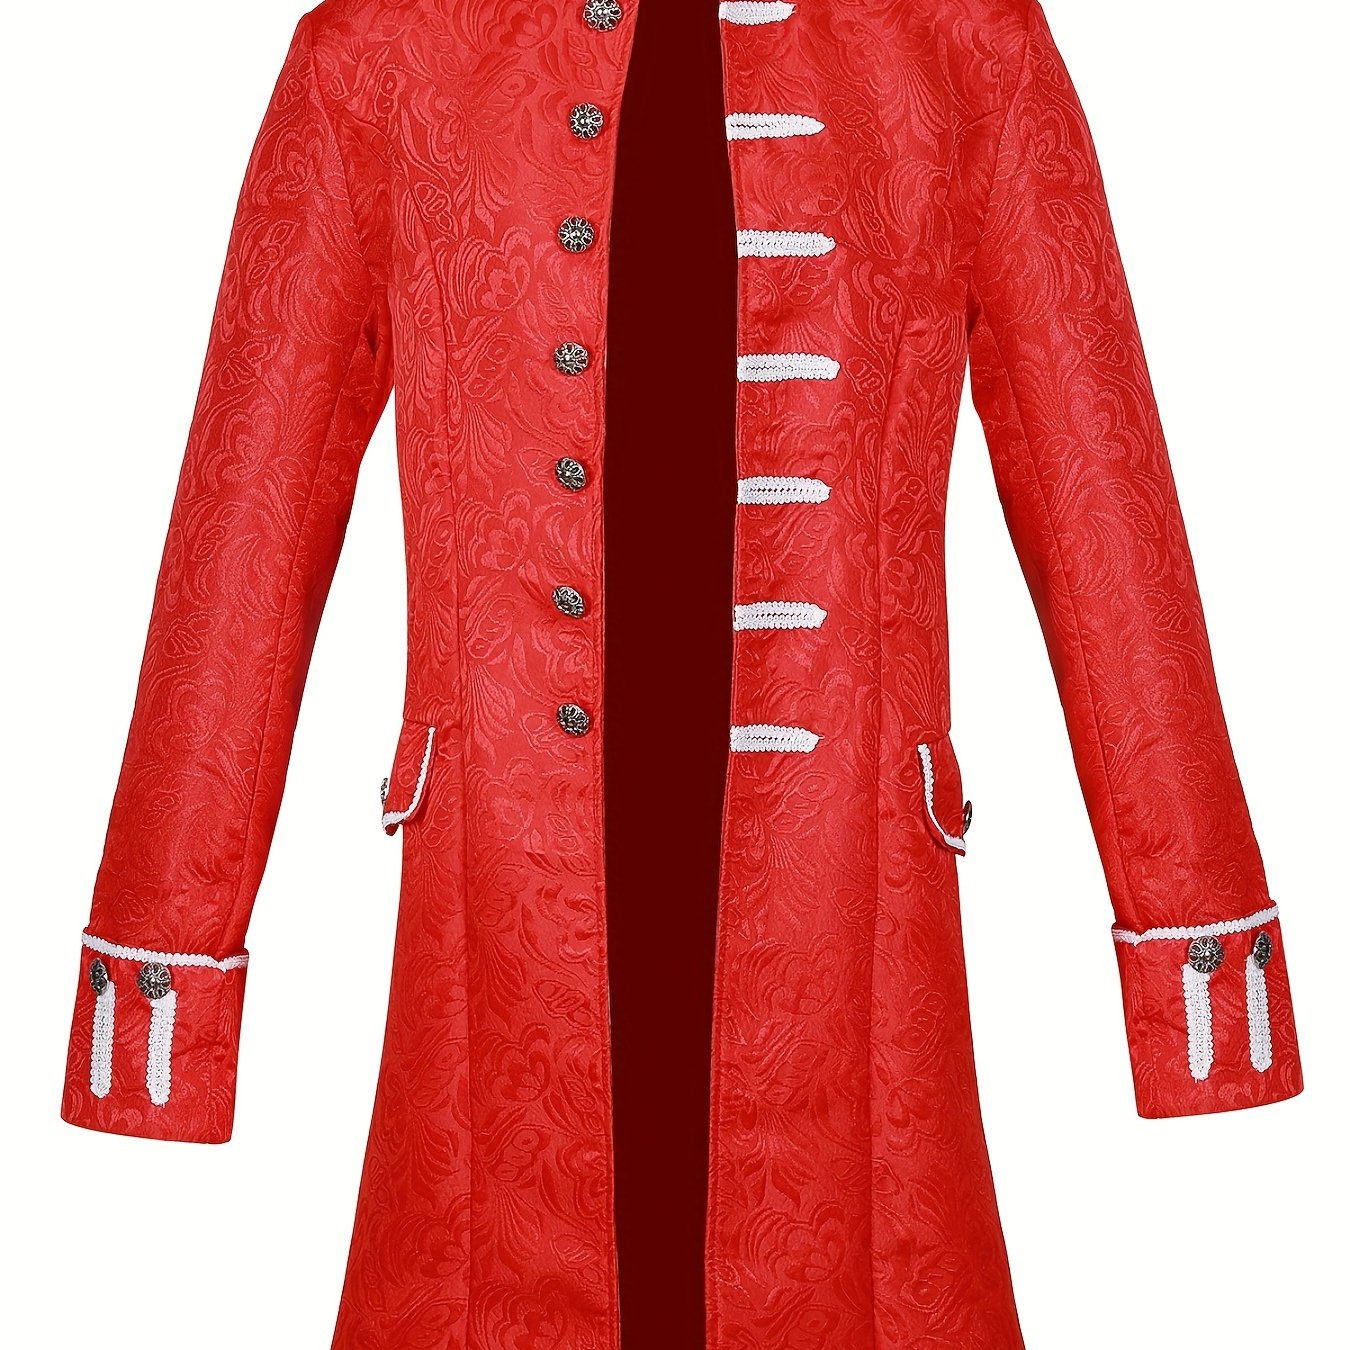 men steampunk costume jacket vintage overcoat medieval costume gothic vampire trench coat cloak halloween costume